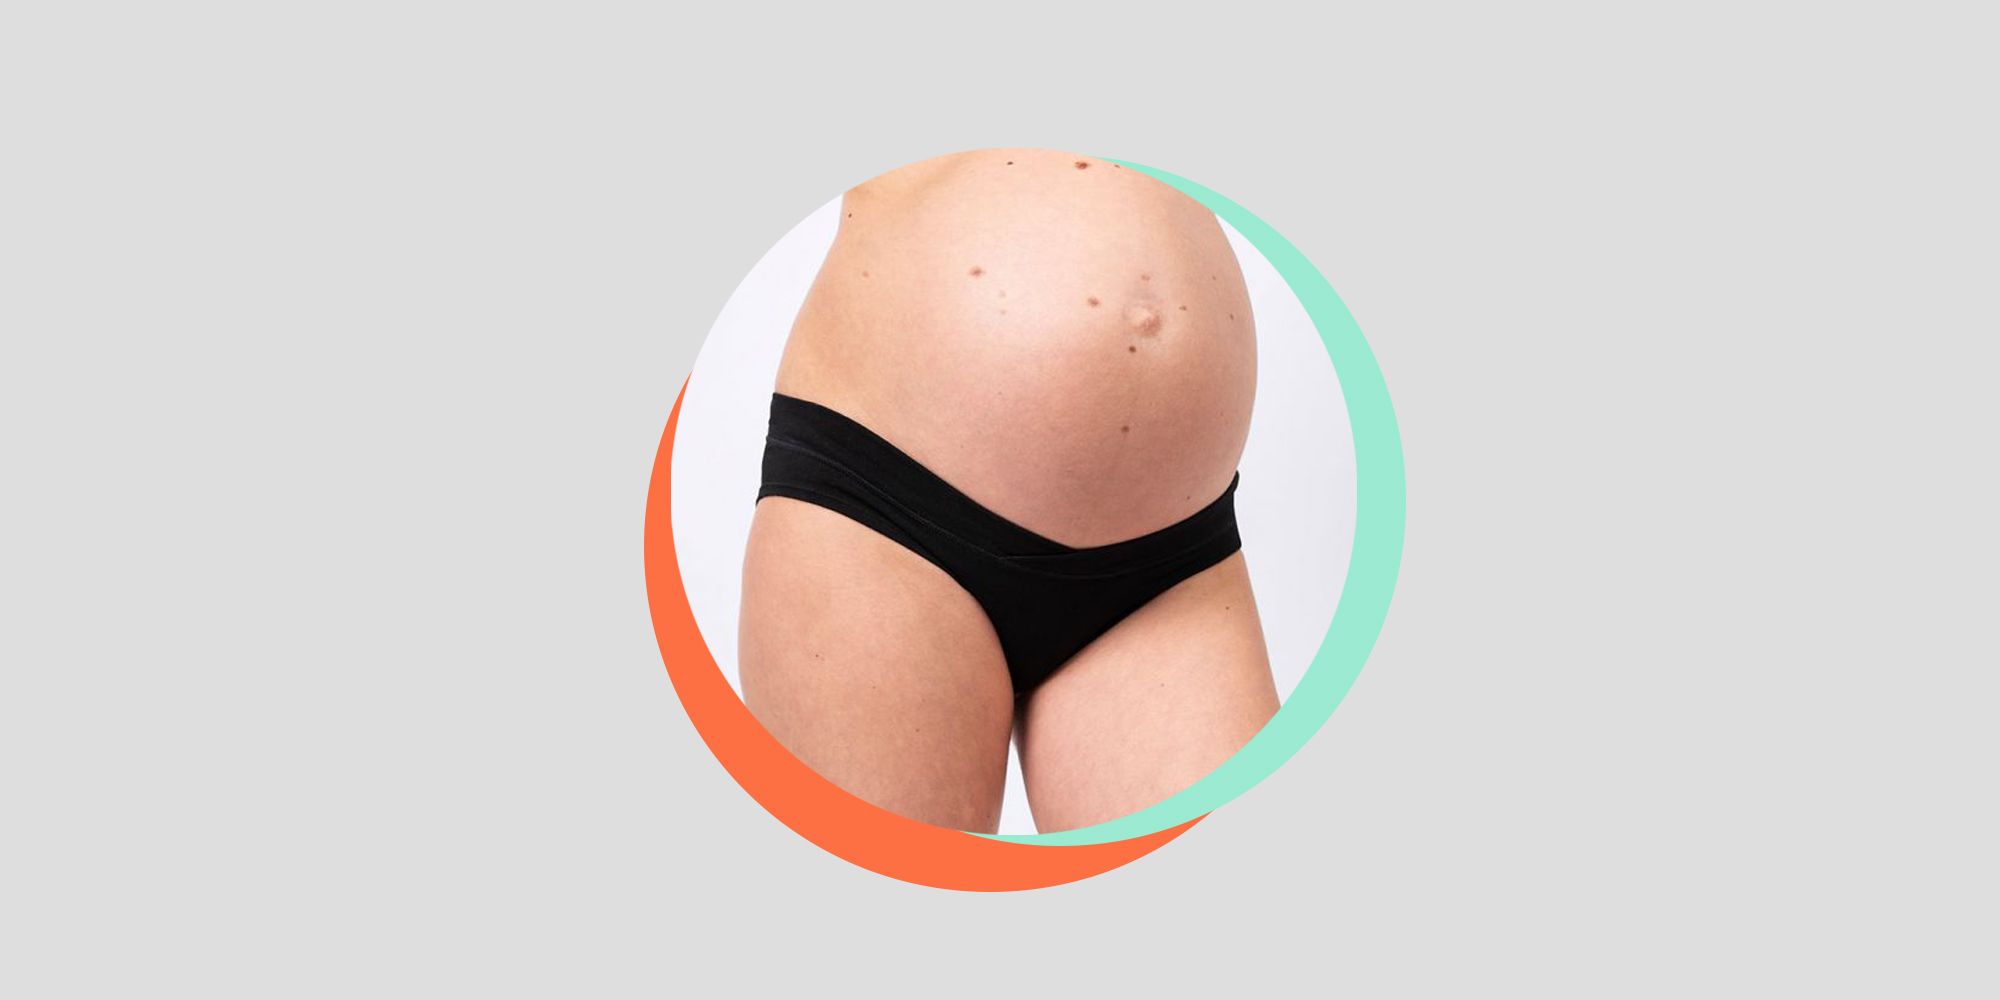 Intimate Portal Maternity Underwear Under The Bump Pregnancy